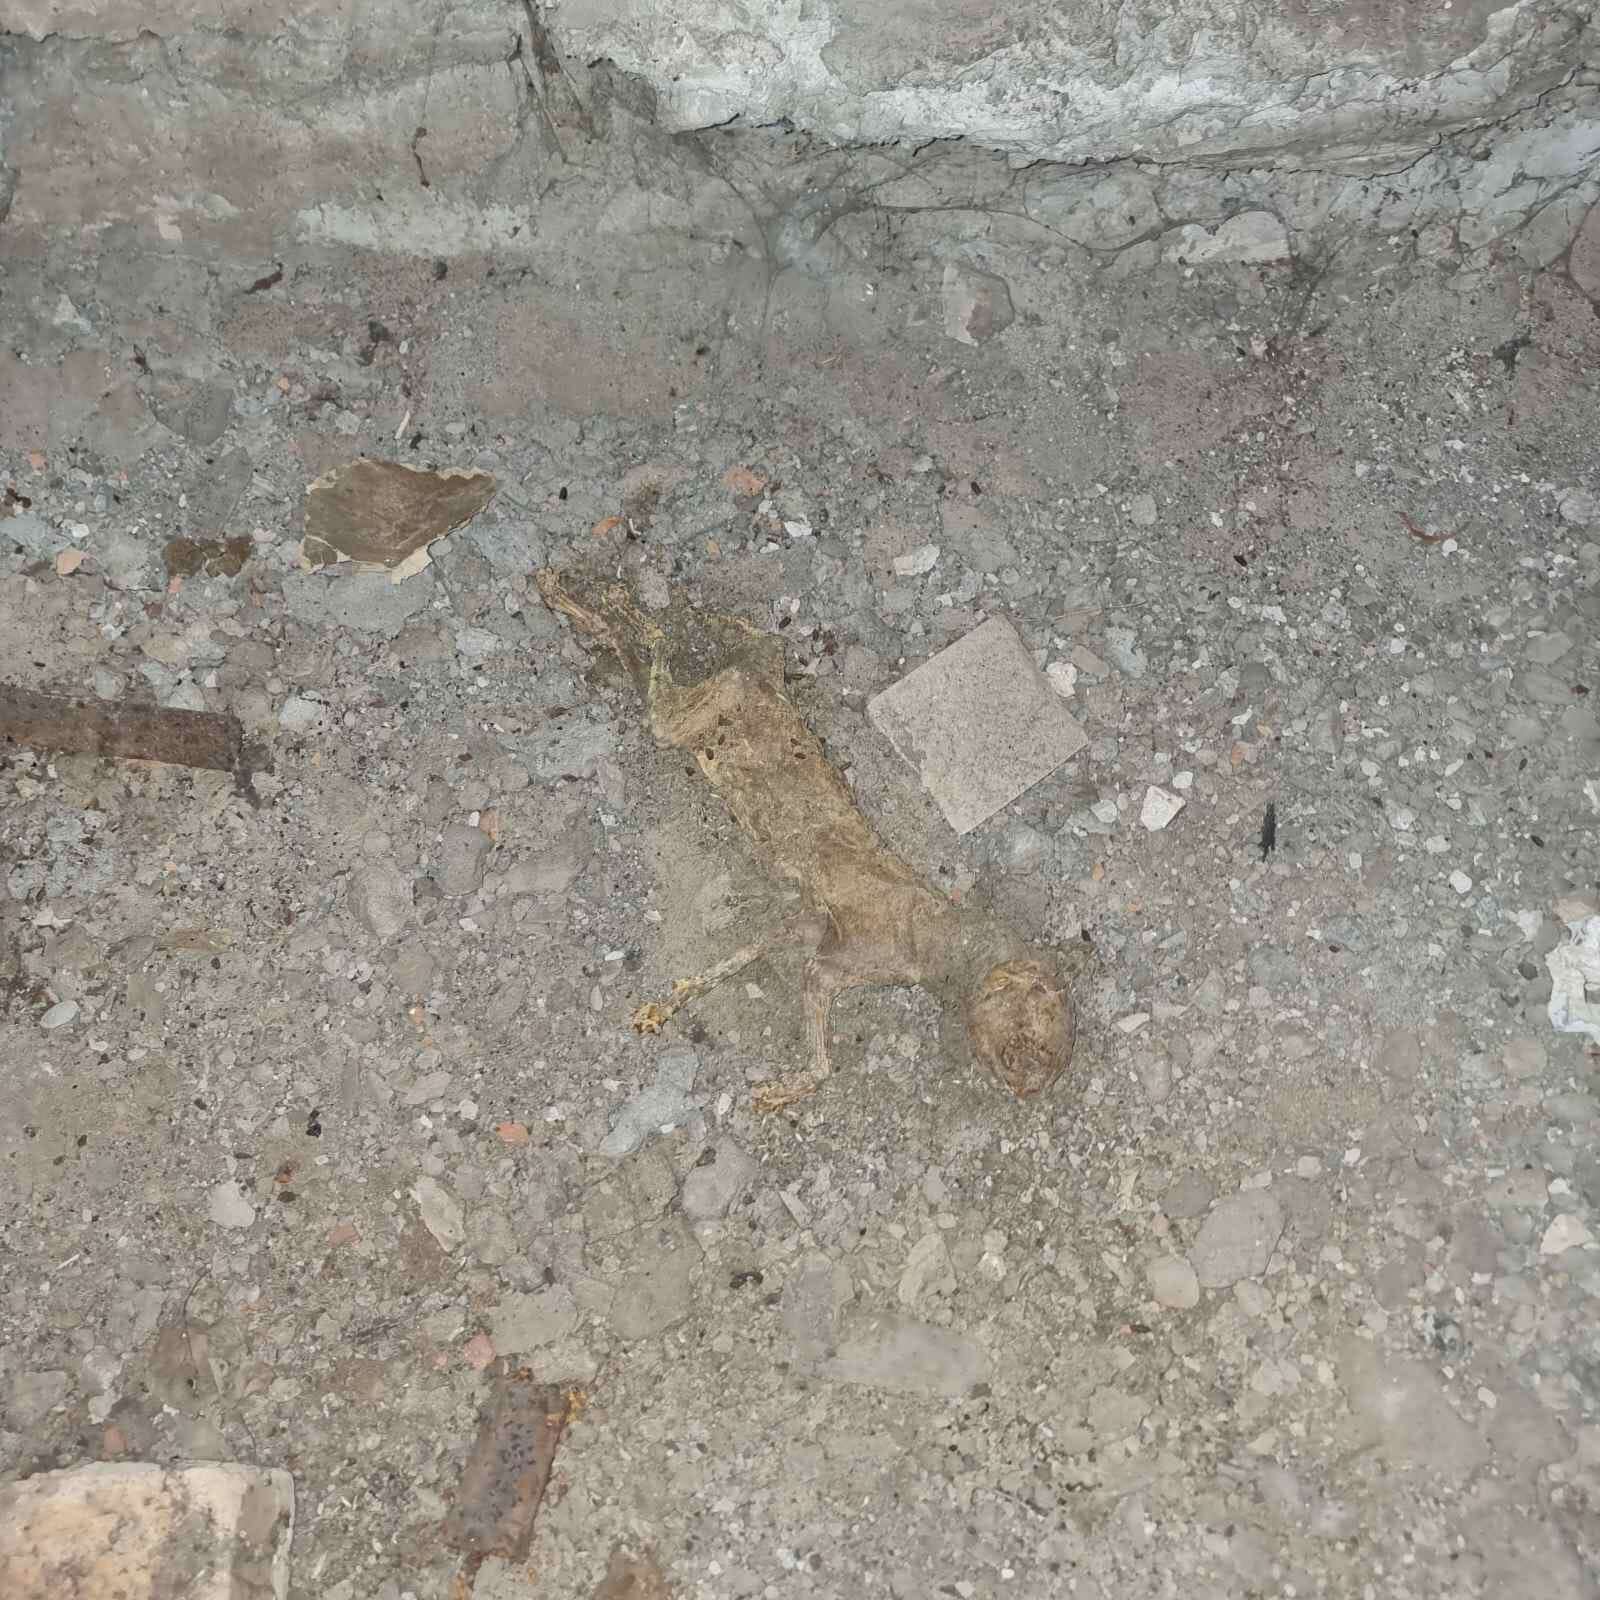 загиблі у підвалі коти Кам'янське